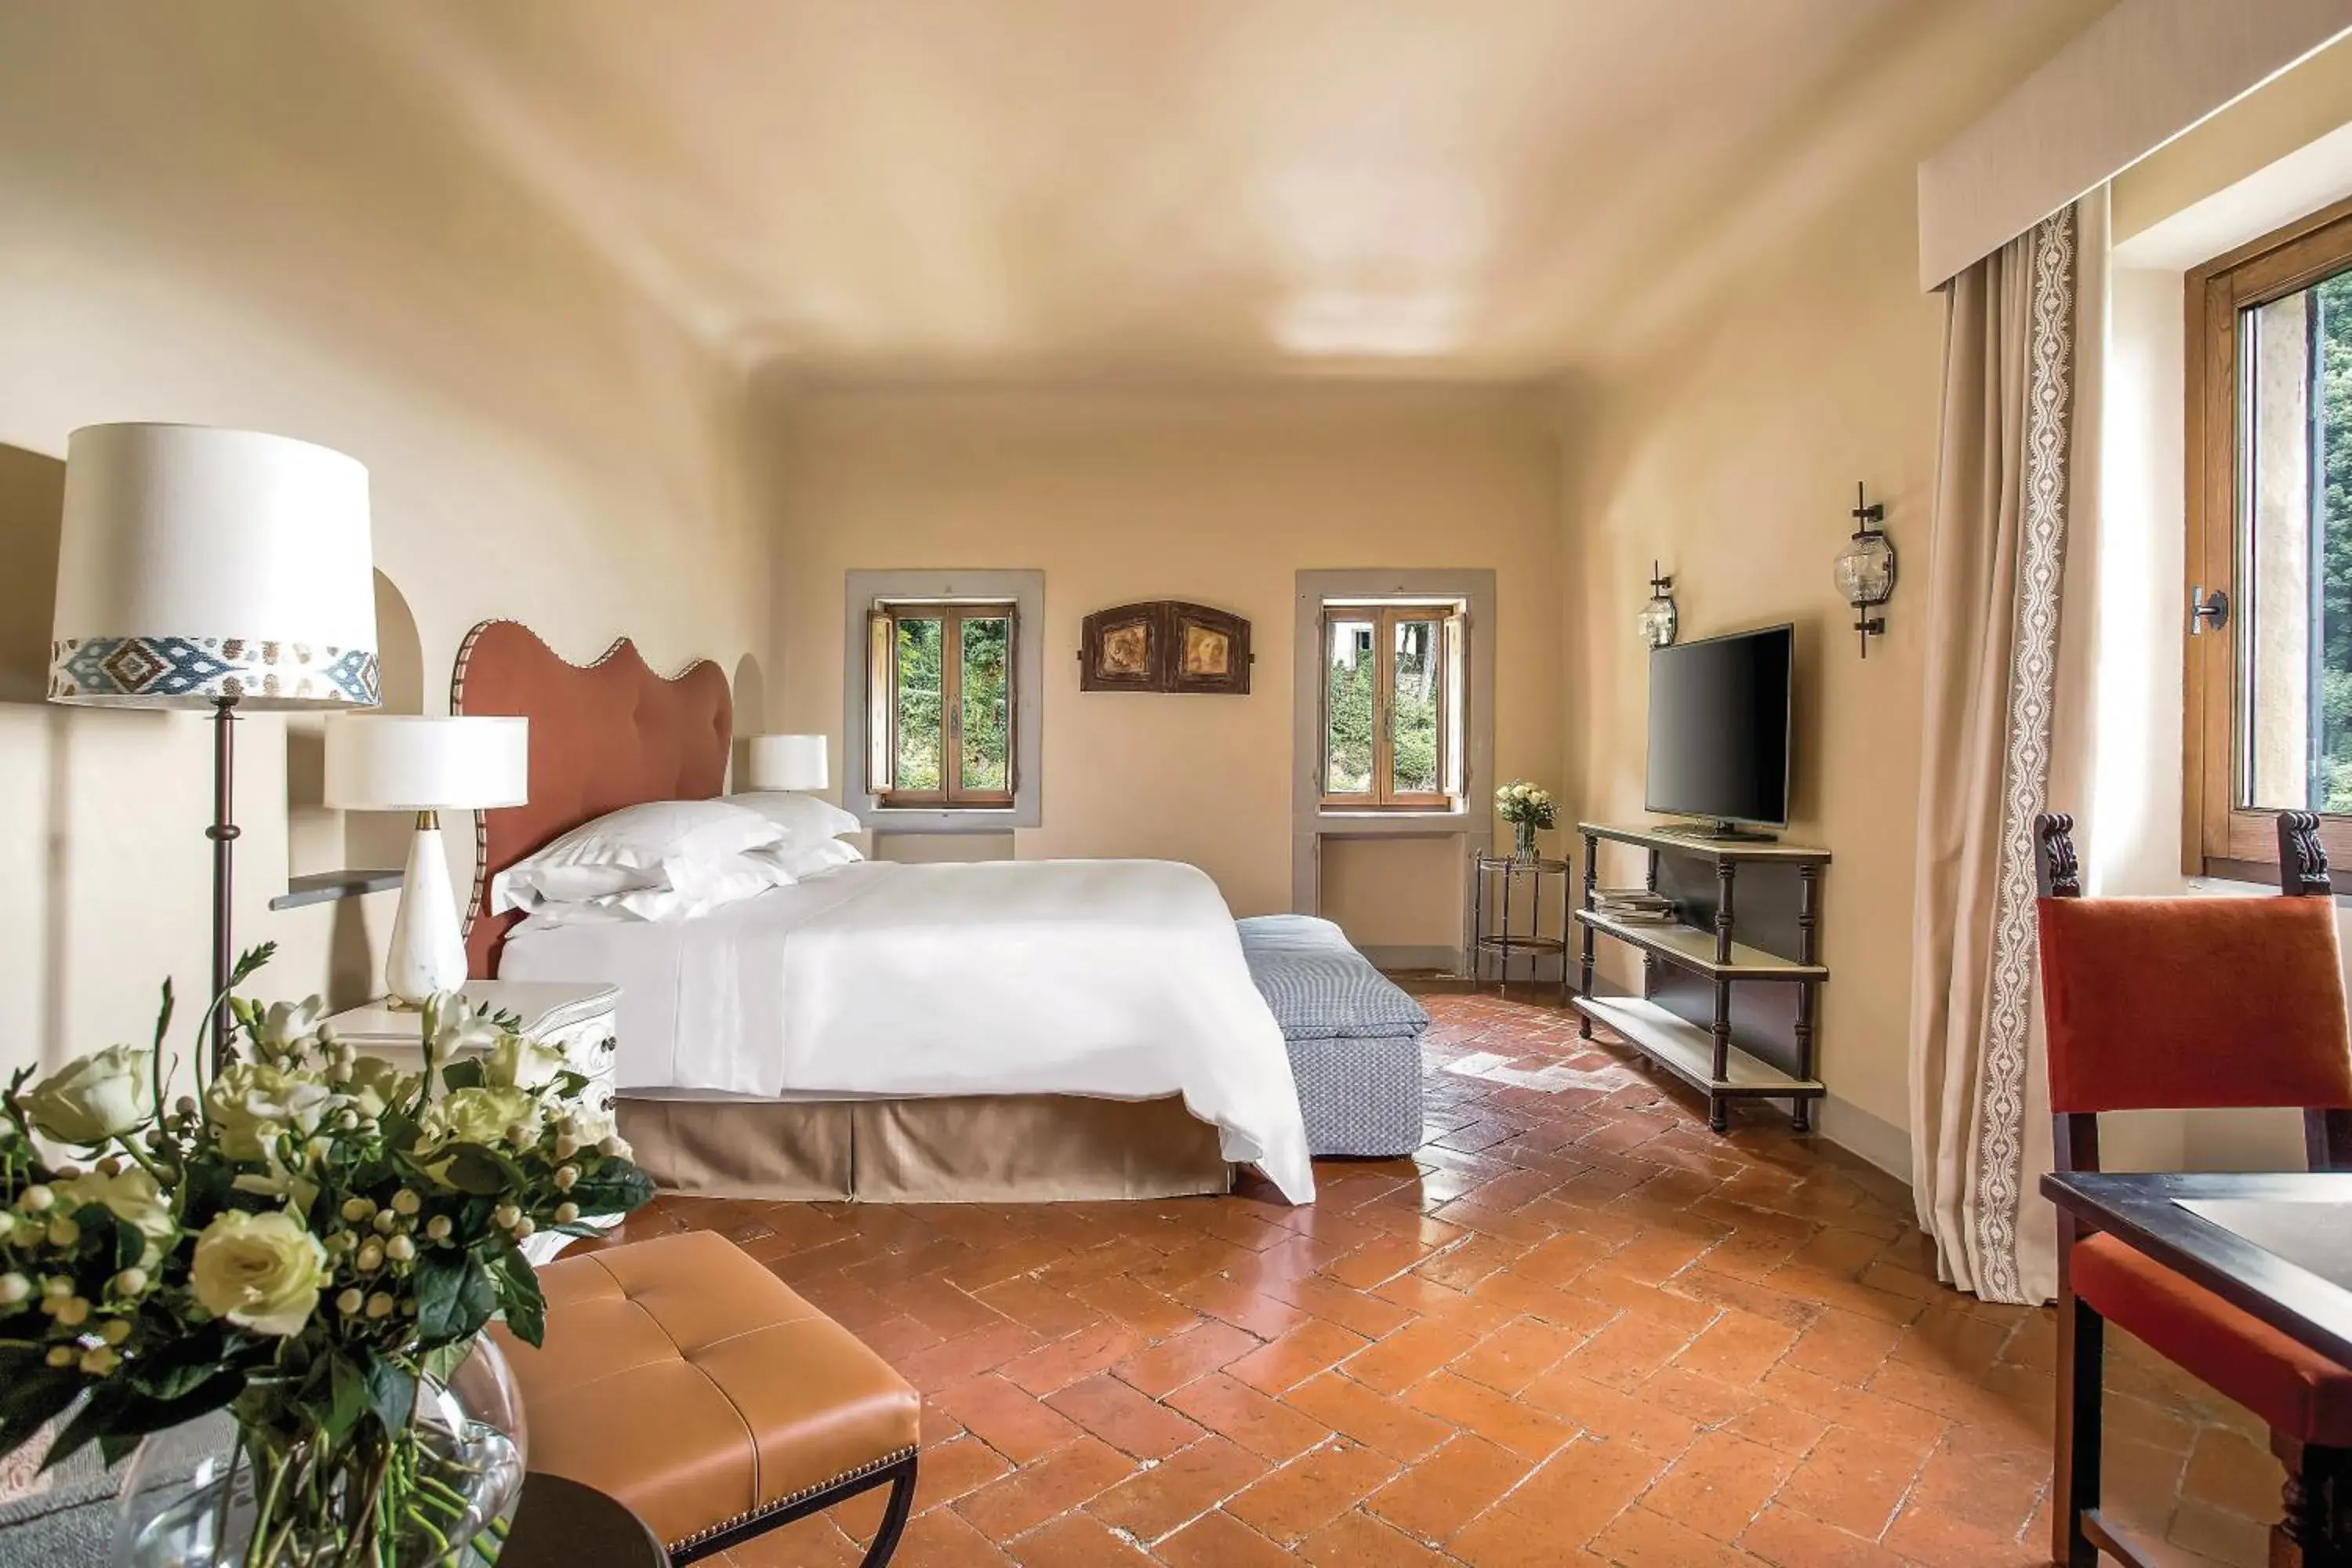 Bedroom, Room Photo in Villa San Michele, A Belmond Hotel, Florence